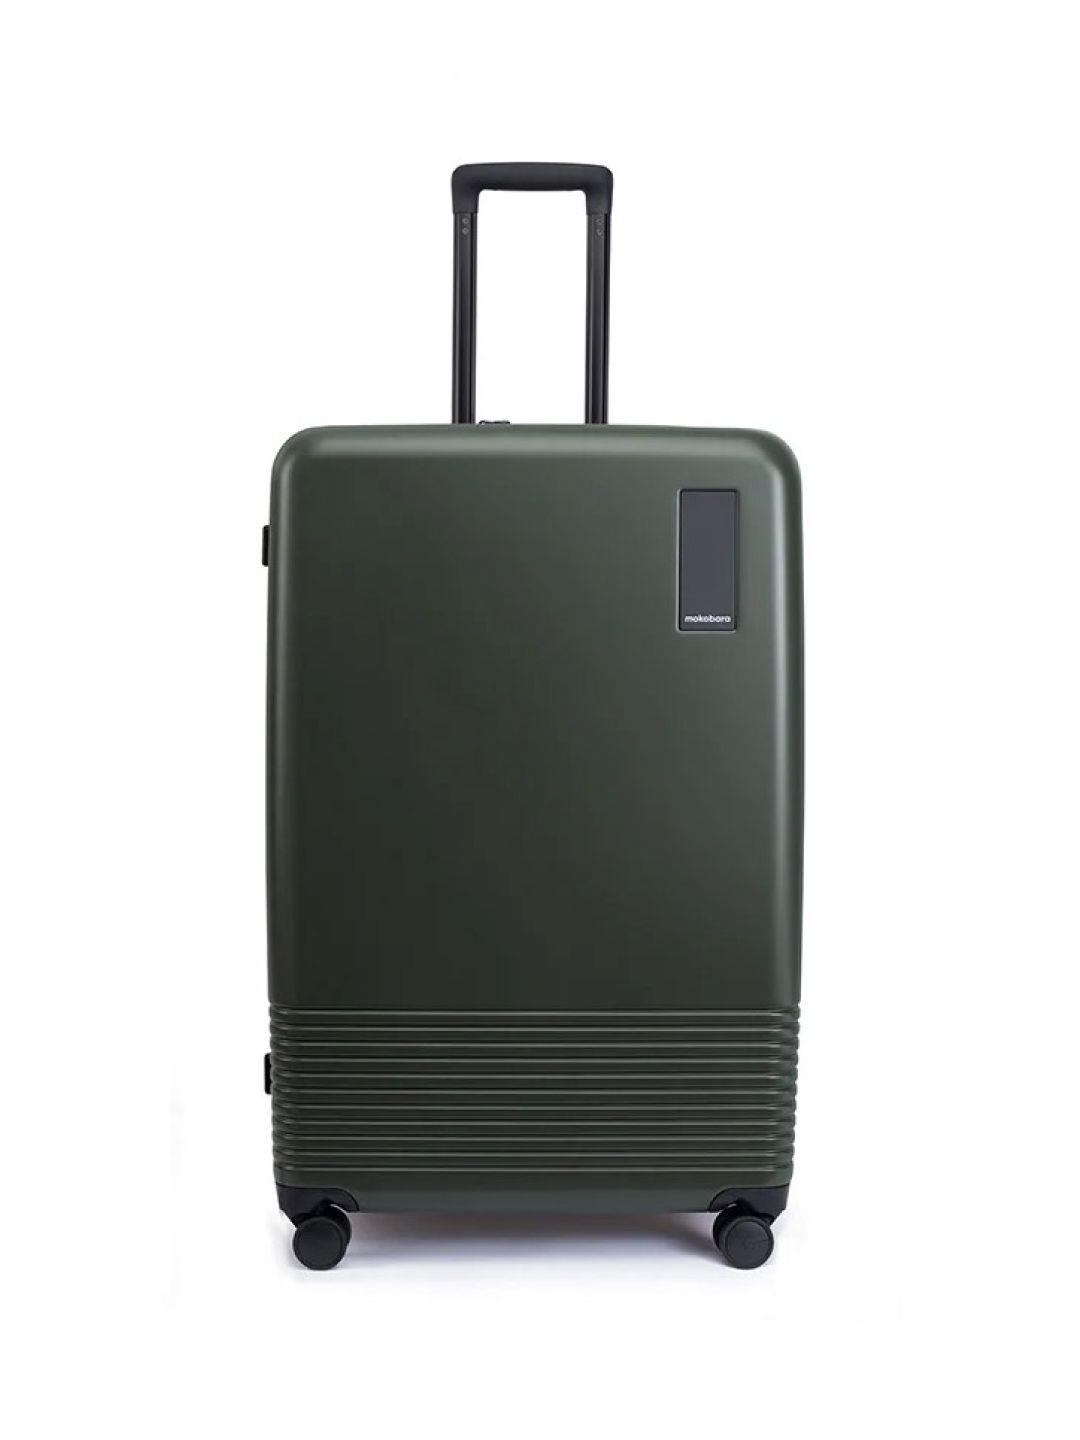 mokobara green textured hard-sided large trolley suitcase